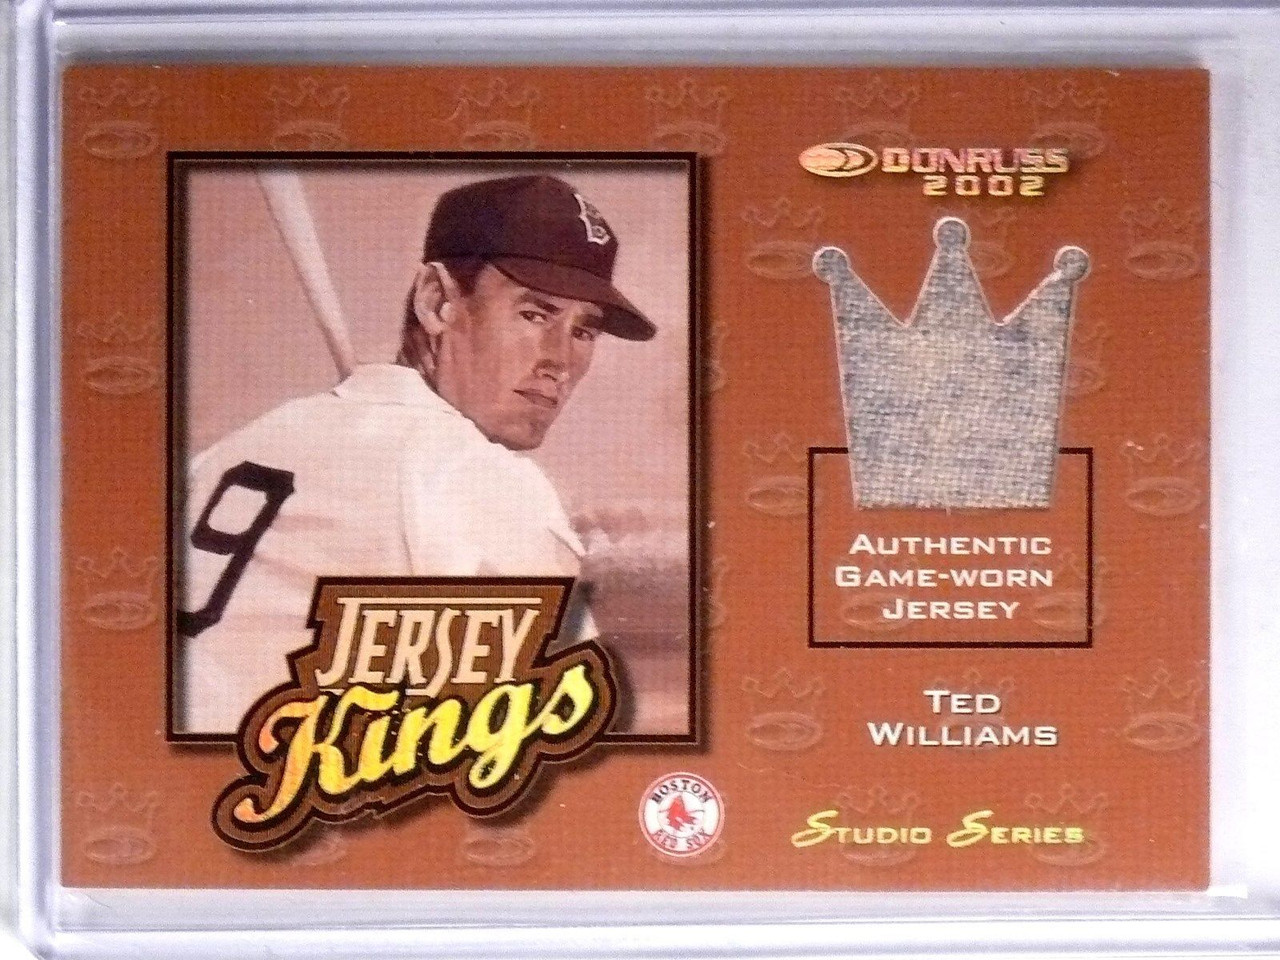 2002 Donruss Jersey Kings Studio Series Ted Williams jersey #D09